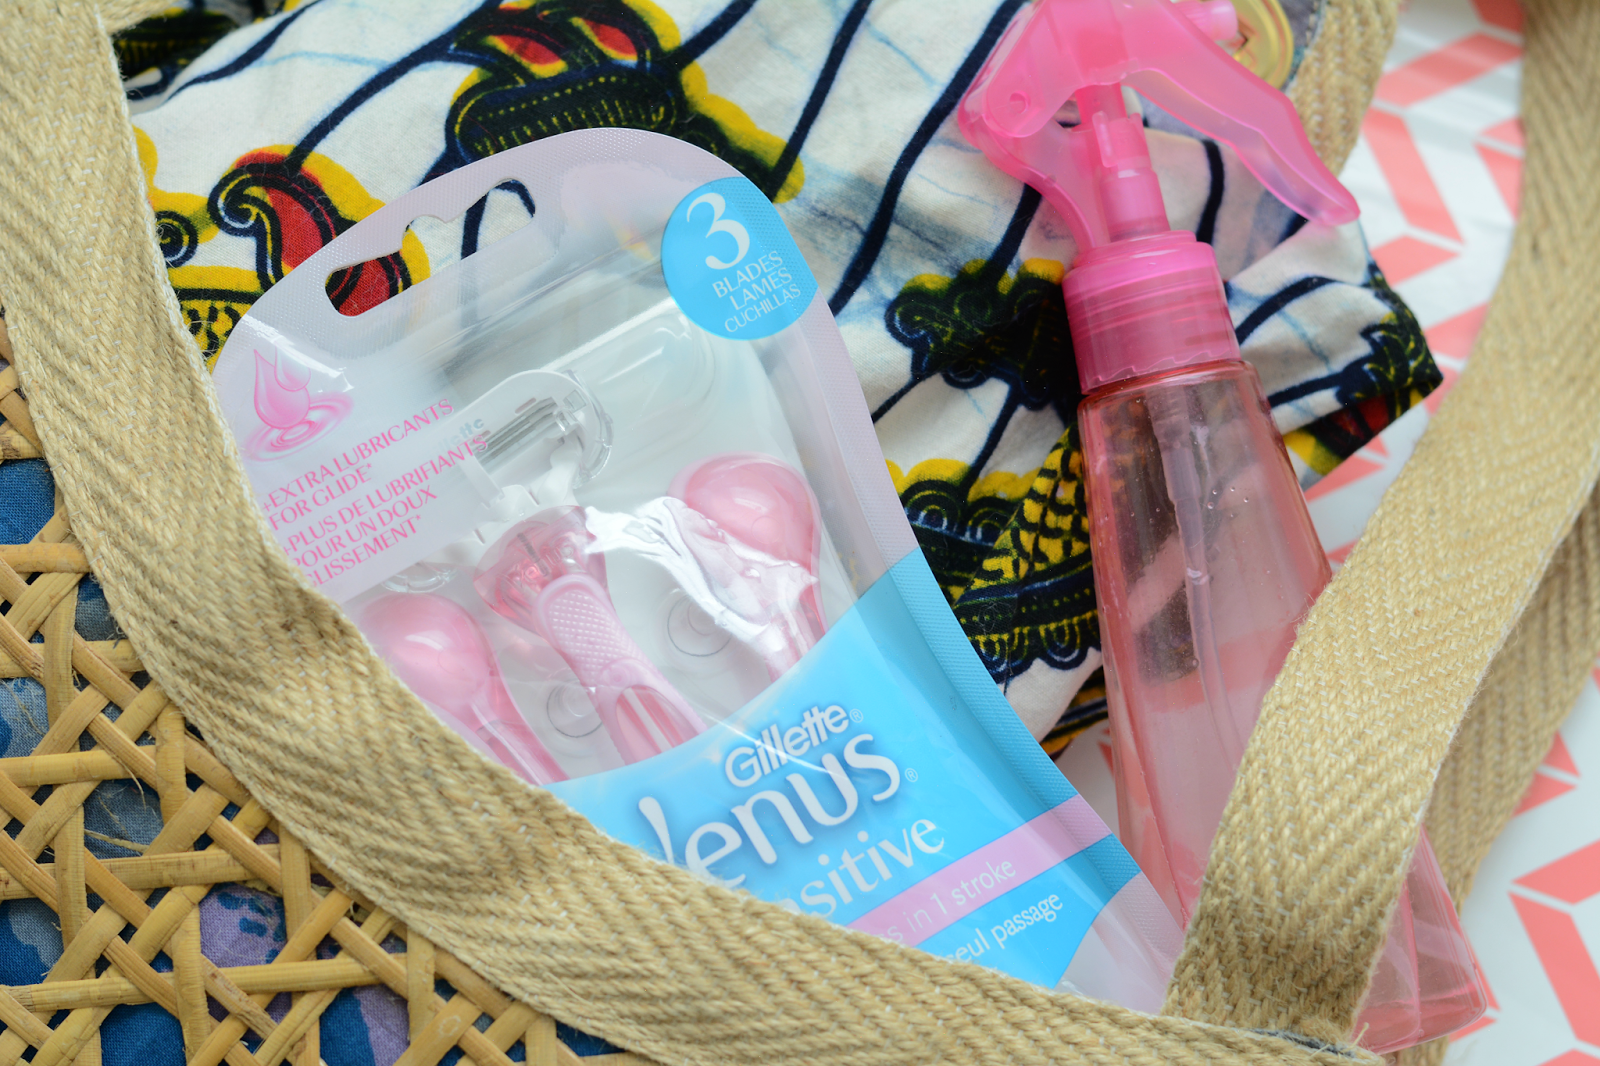 keep disposable venus razors stocked in travel bag